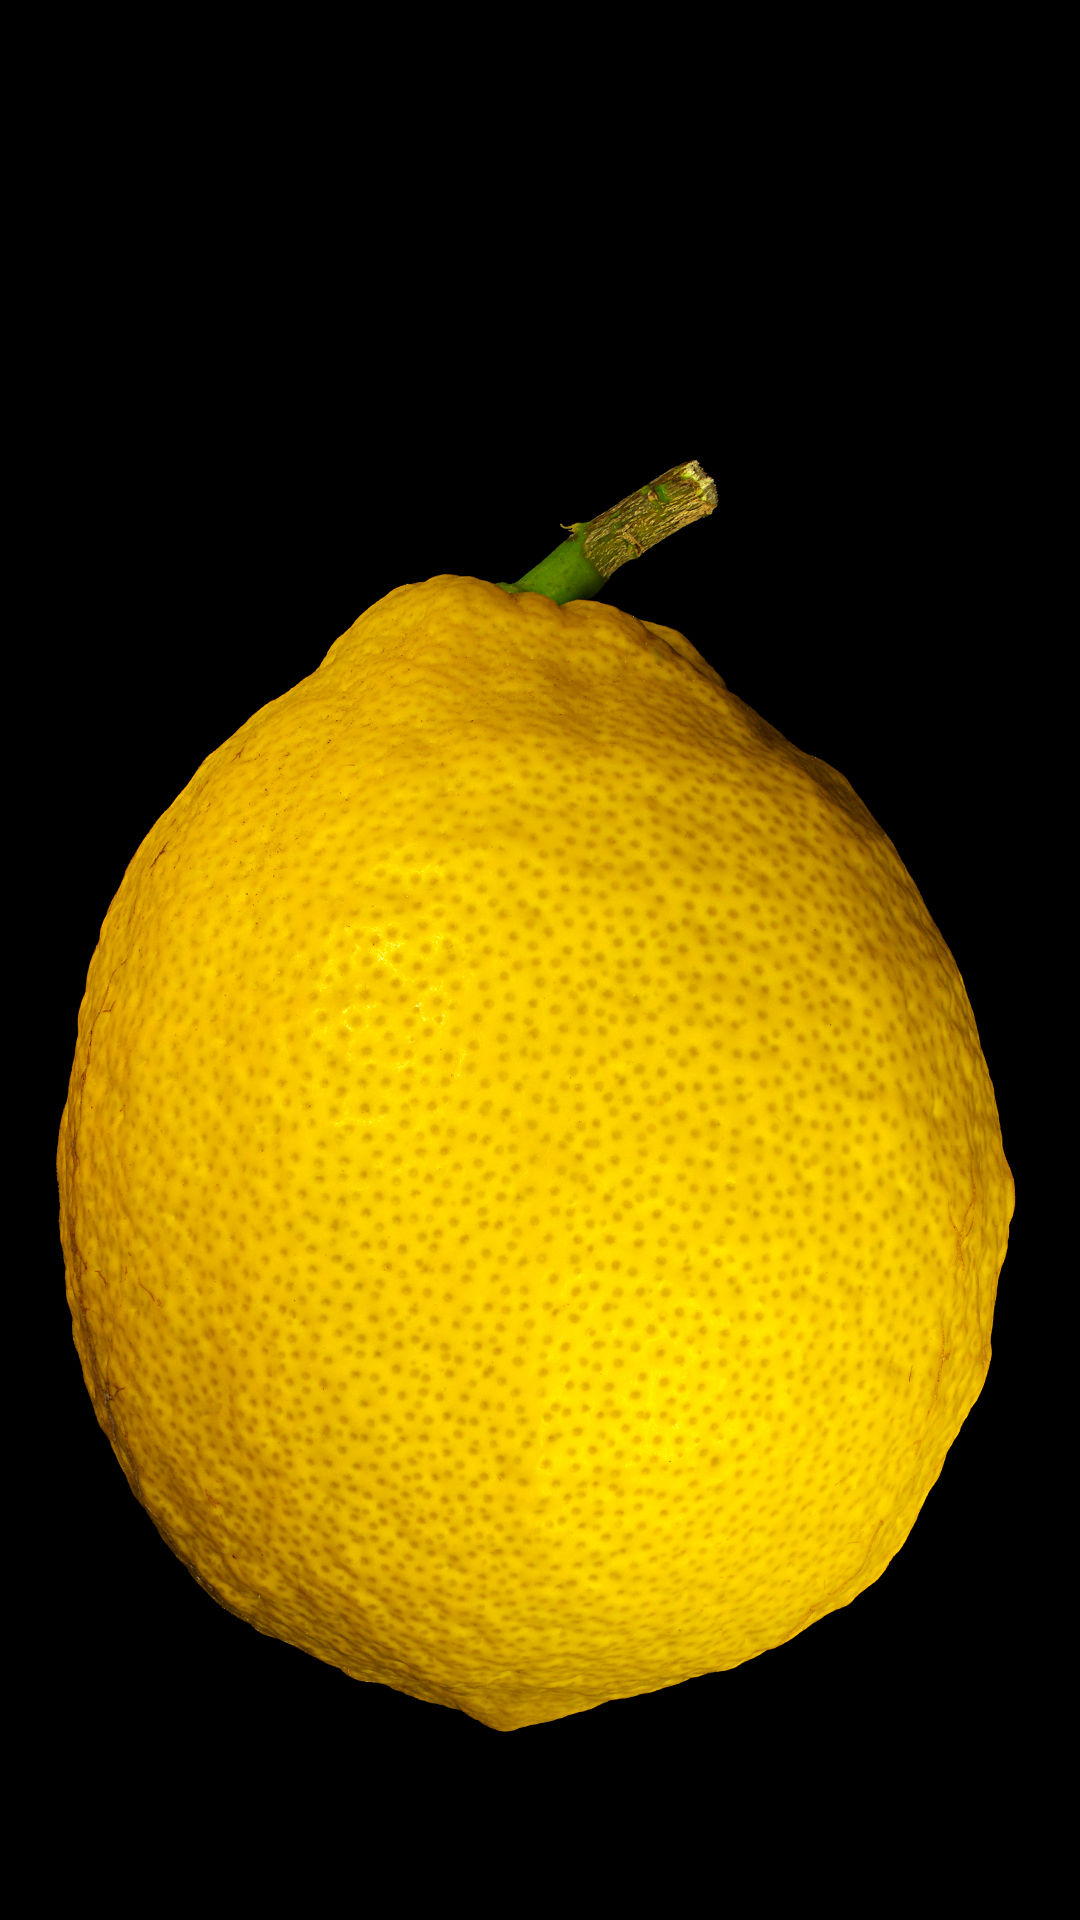 Die Buntlaubige Zitrone: Citrus × limon ‚Foliis variegatis‘